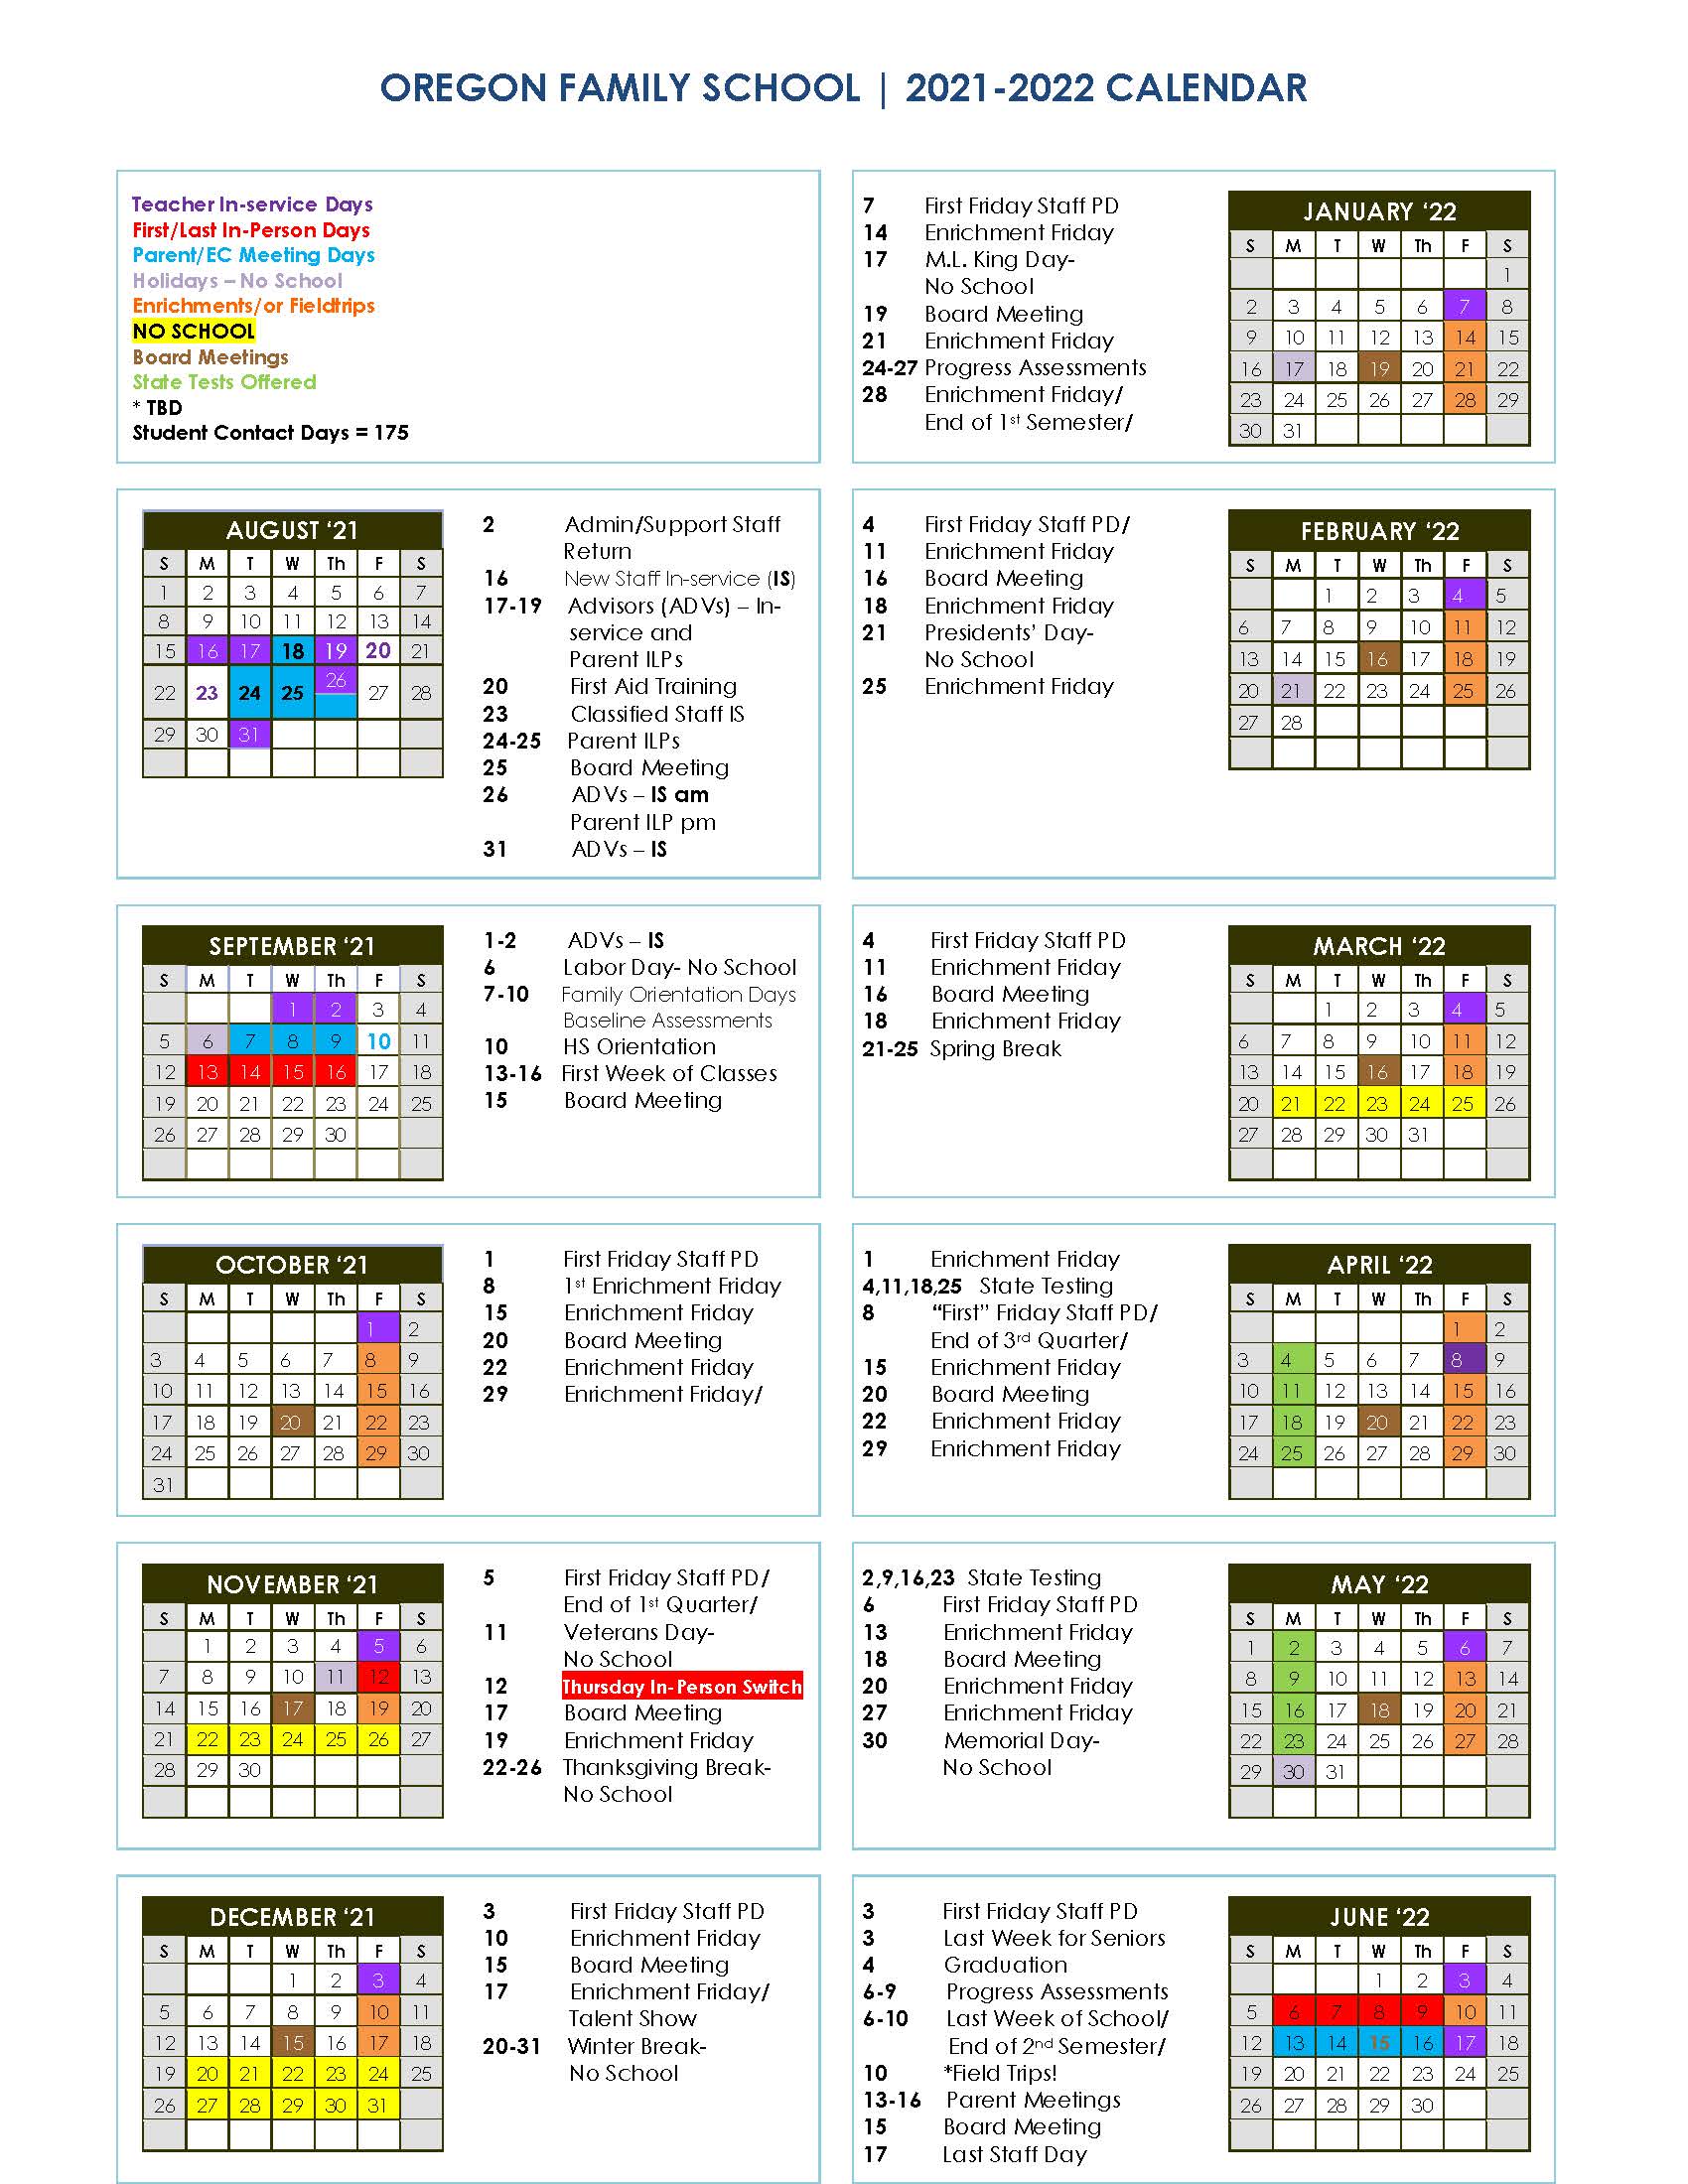 Oregon State University Calendar 2022 23 Academic Calendar - Oregon Family School